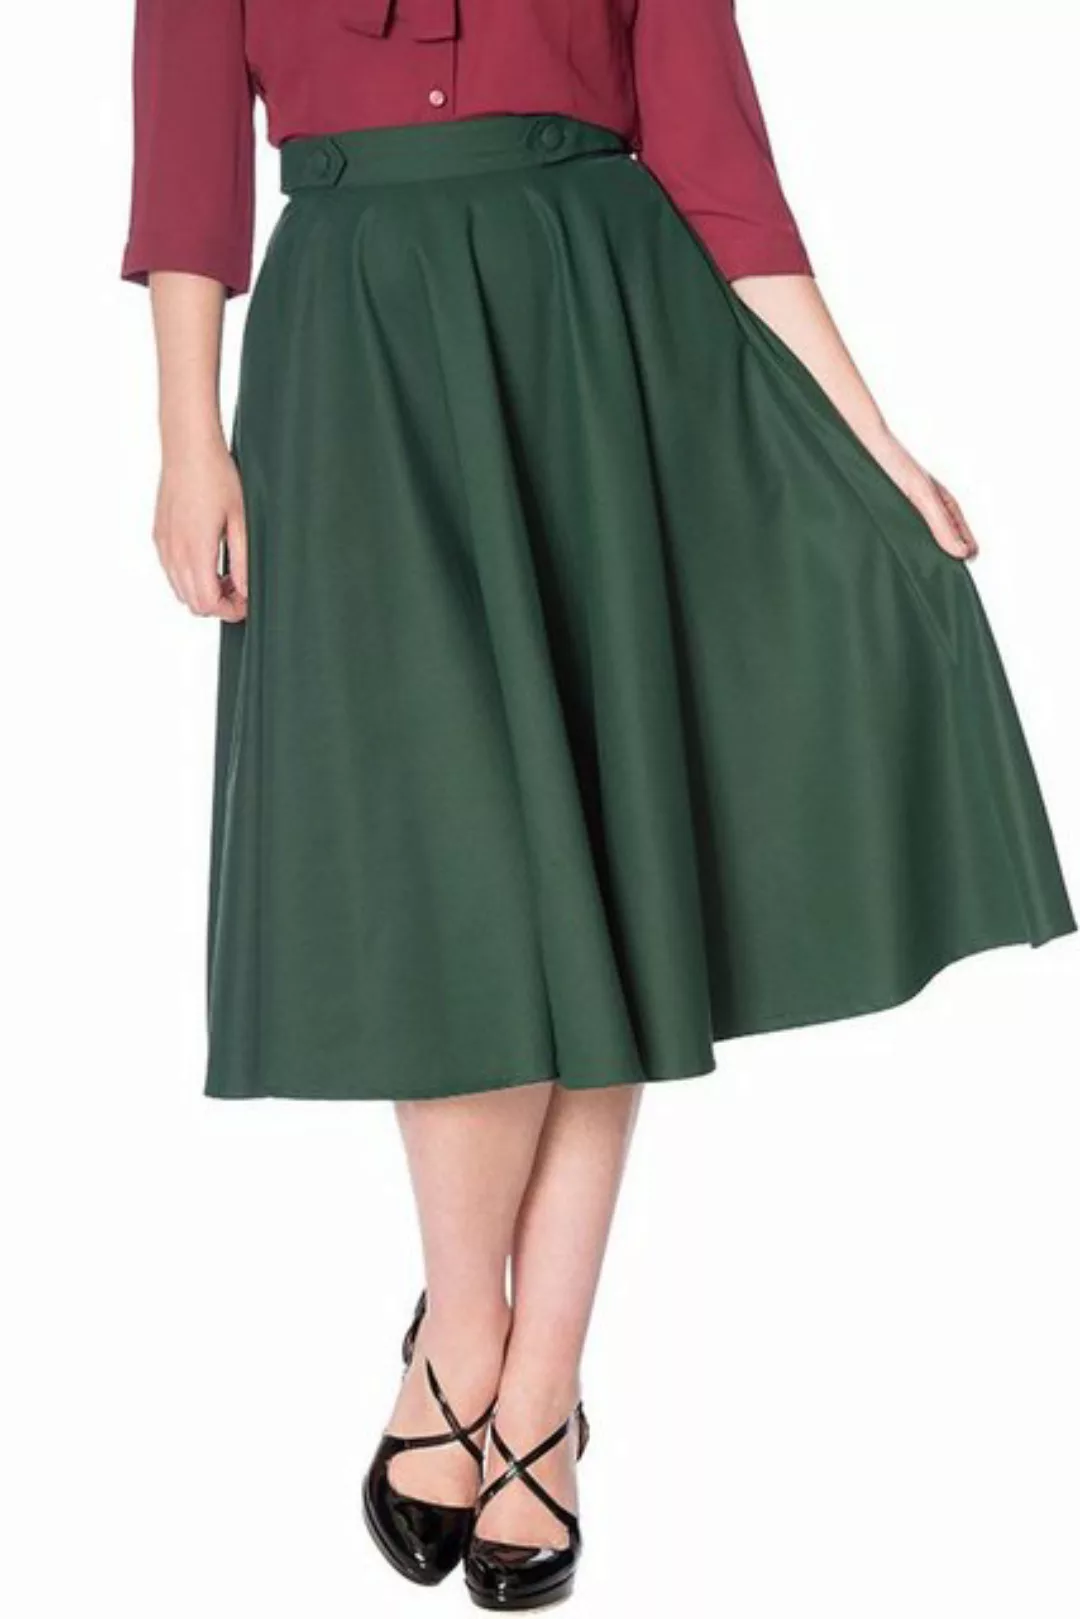 Banned A-Linien-Rock Di Di Plain Grün Retro Vintage Swing Skirt günstig online kaufen